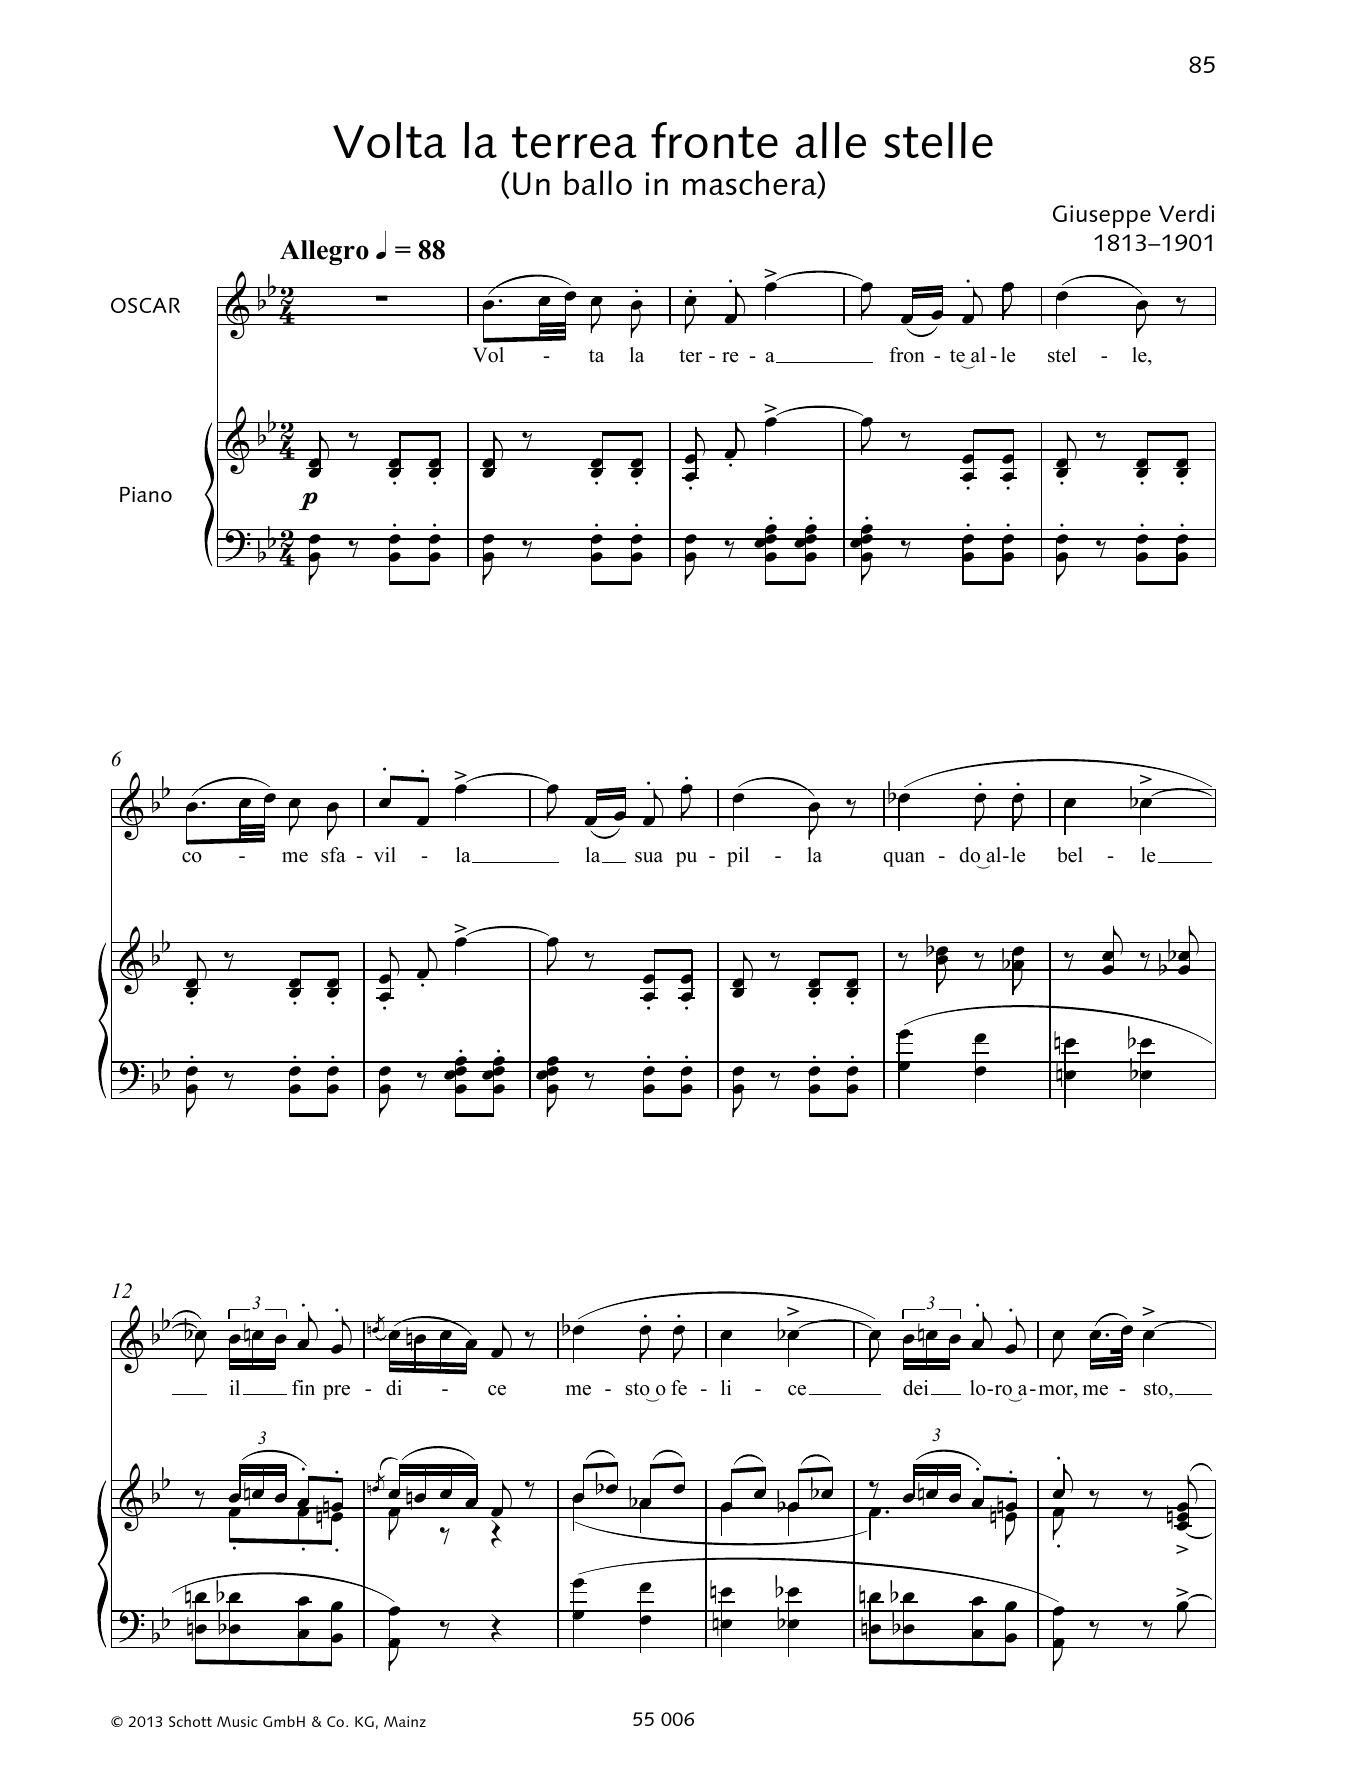 Giuseppe Verdi Volta la terrea fronte alle stelle Sheet Music Notes & Chords for Piano & Vocal - Download or Print PDF